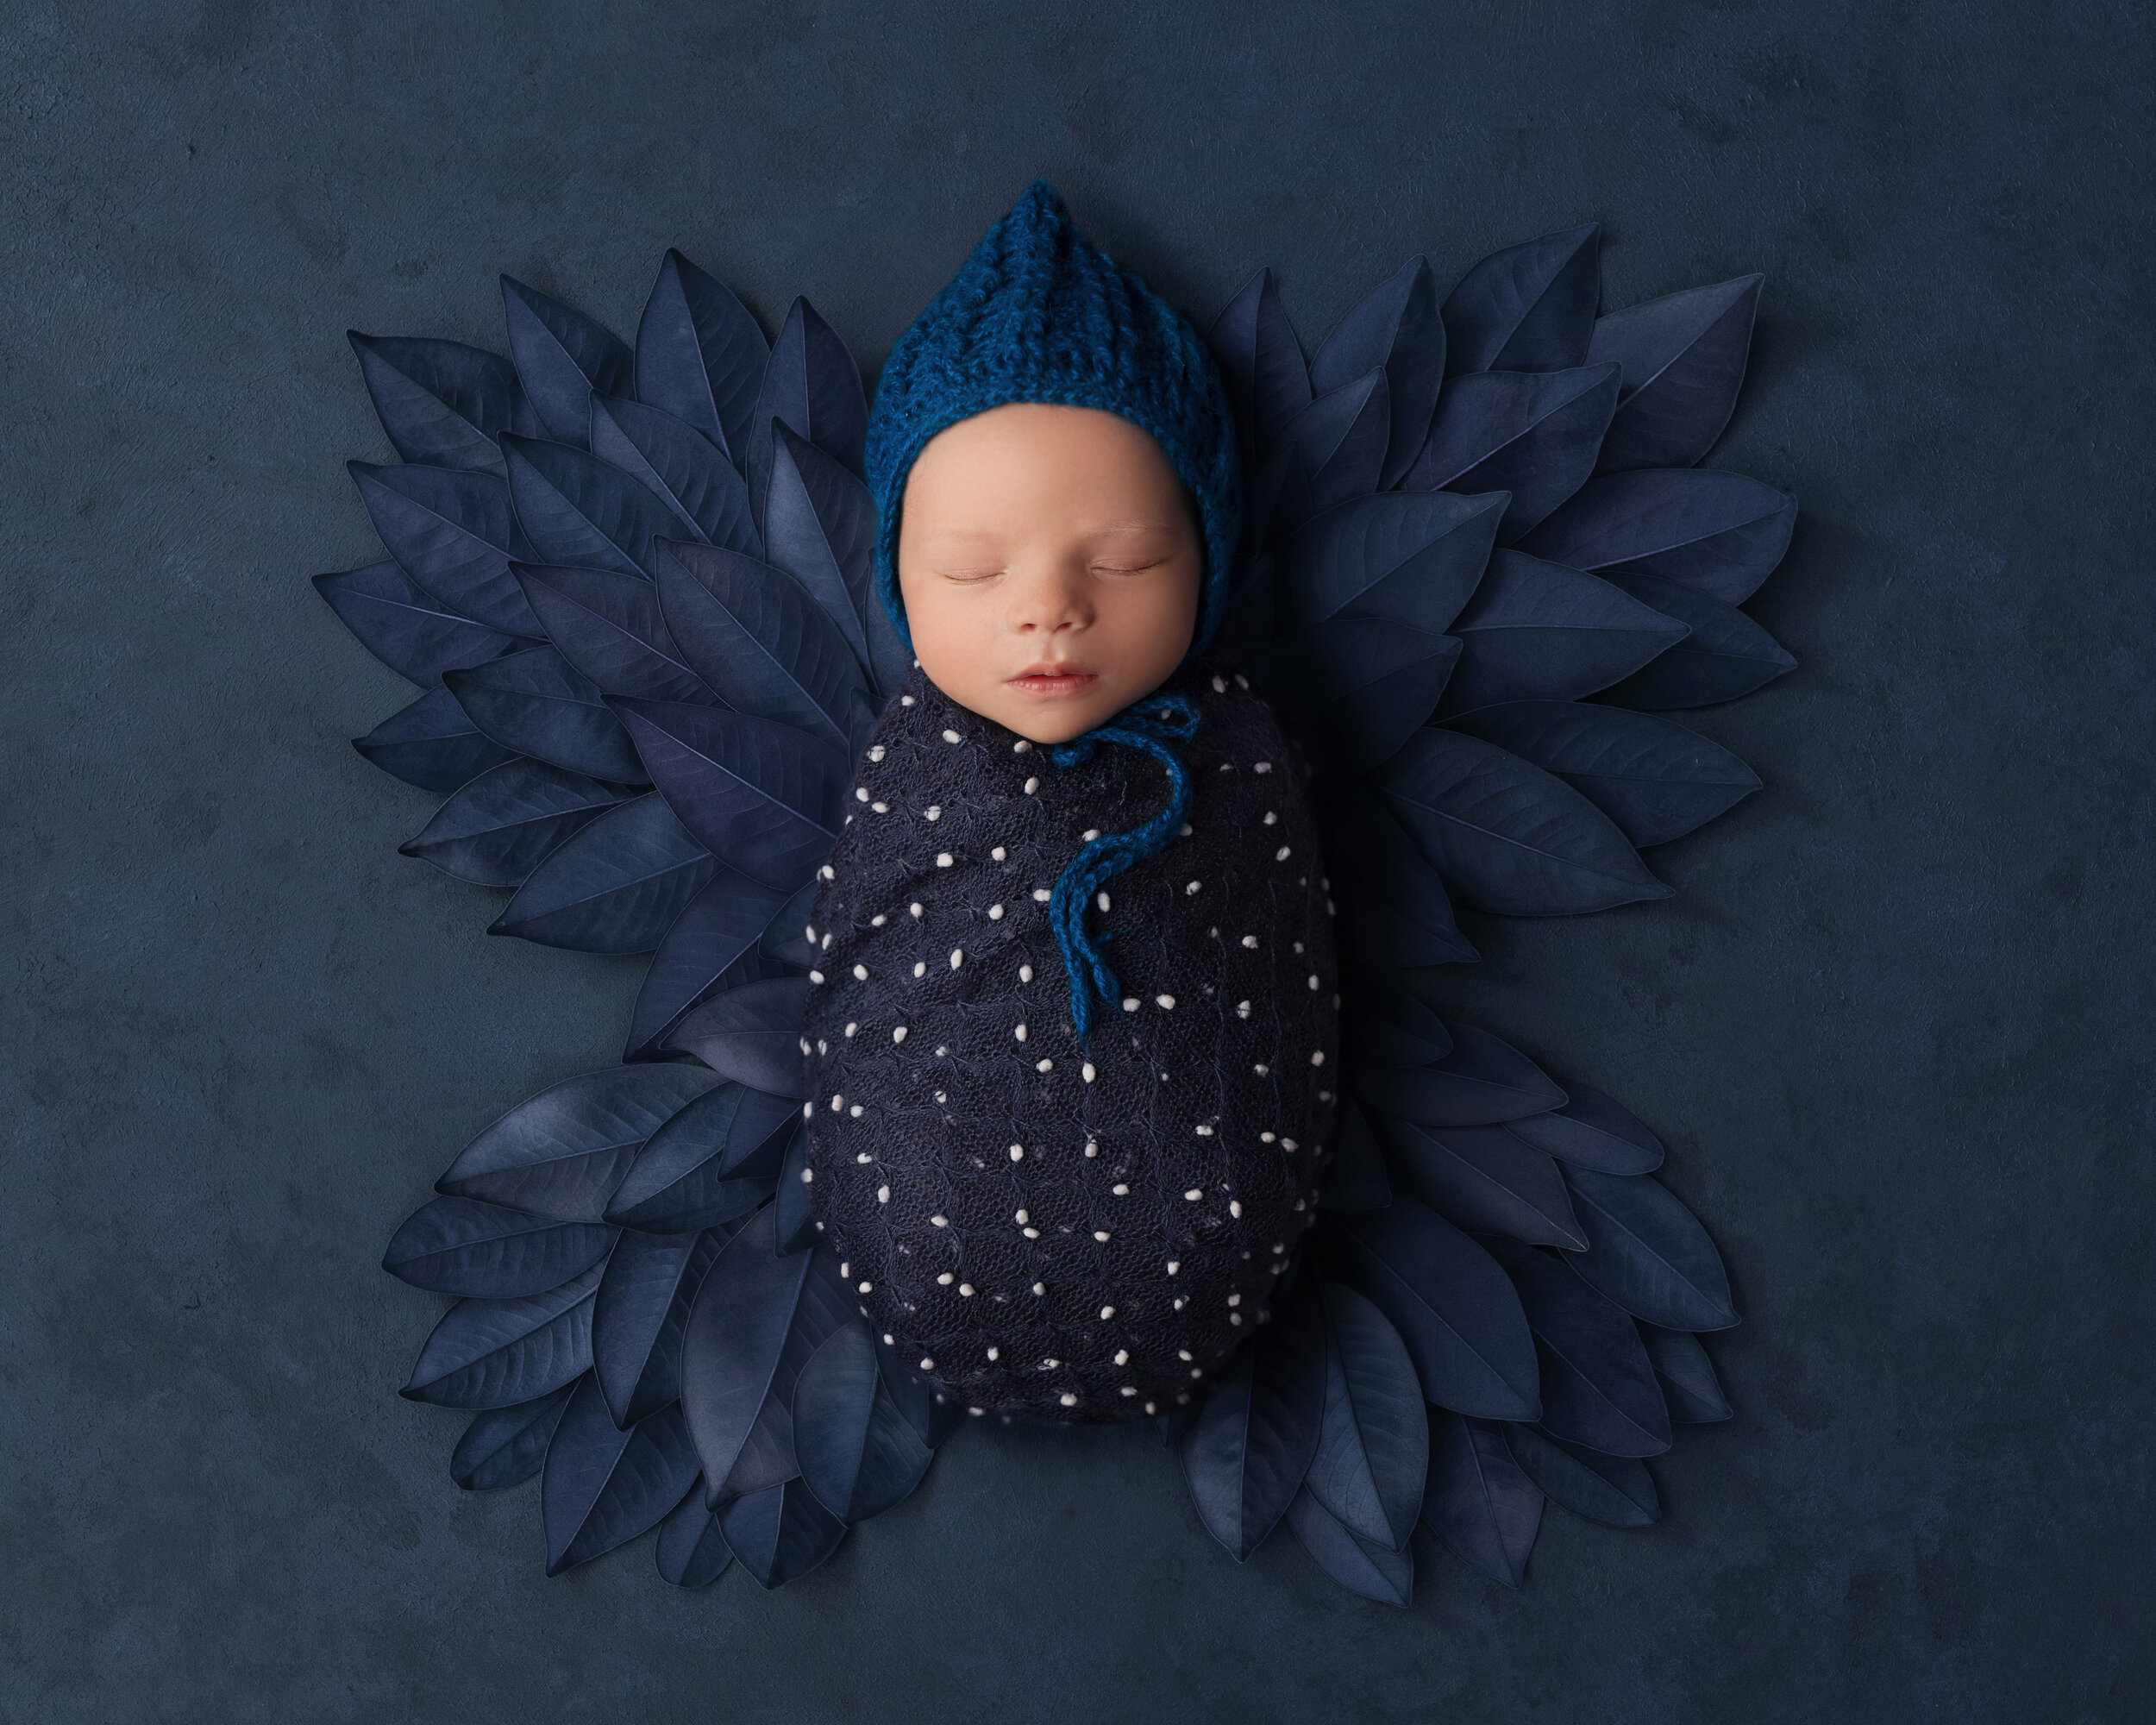 Newborn specialist photographer - karen Kimmins .jpg